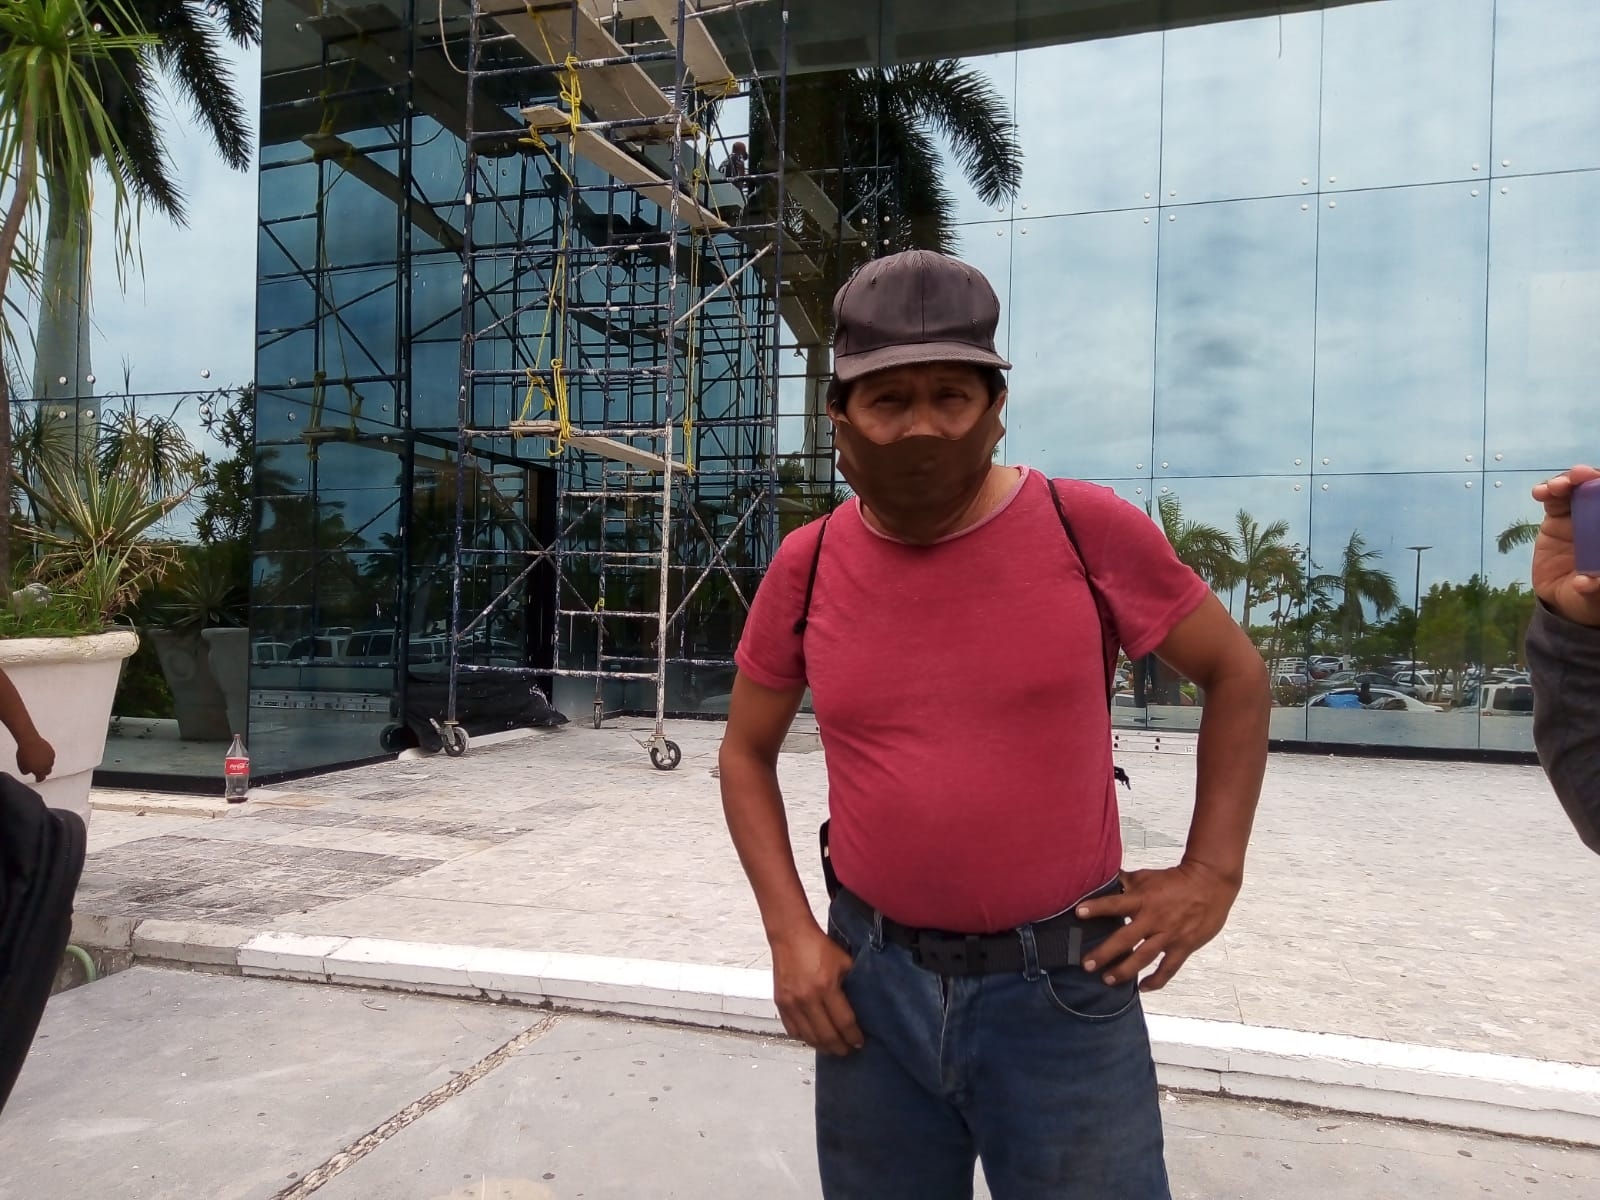 Campeche: Ejidatarios de Calkiní solicitan créditos para instalar un sistema de riego